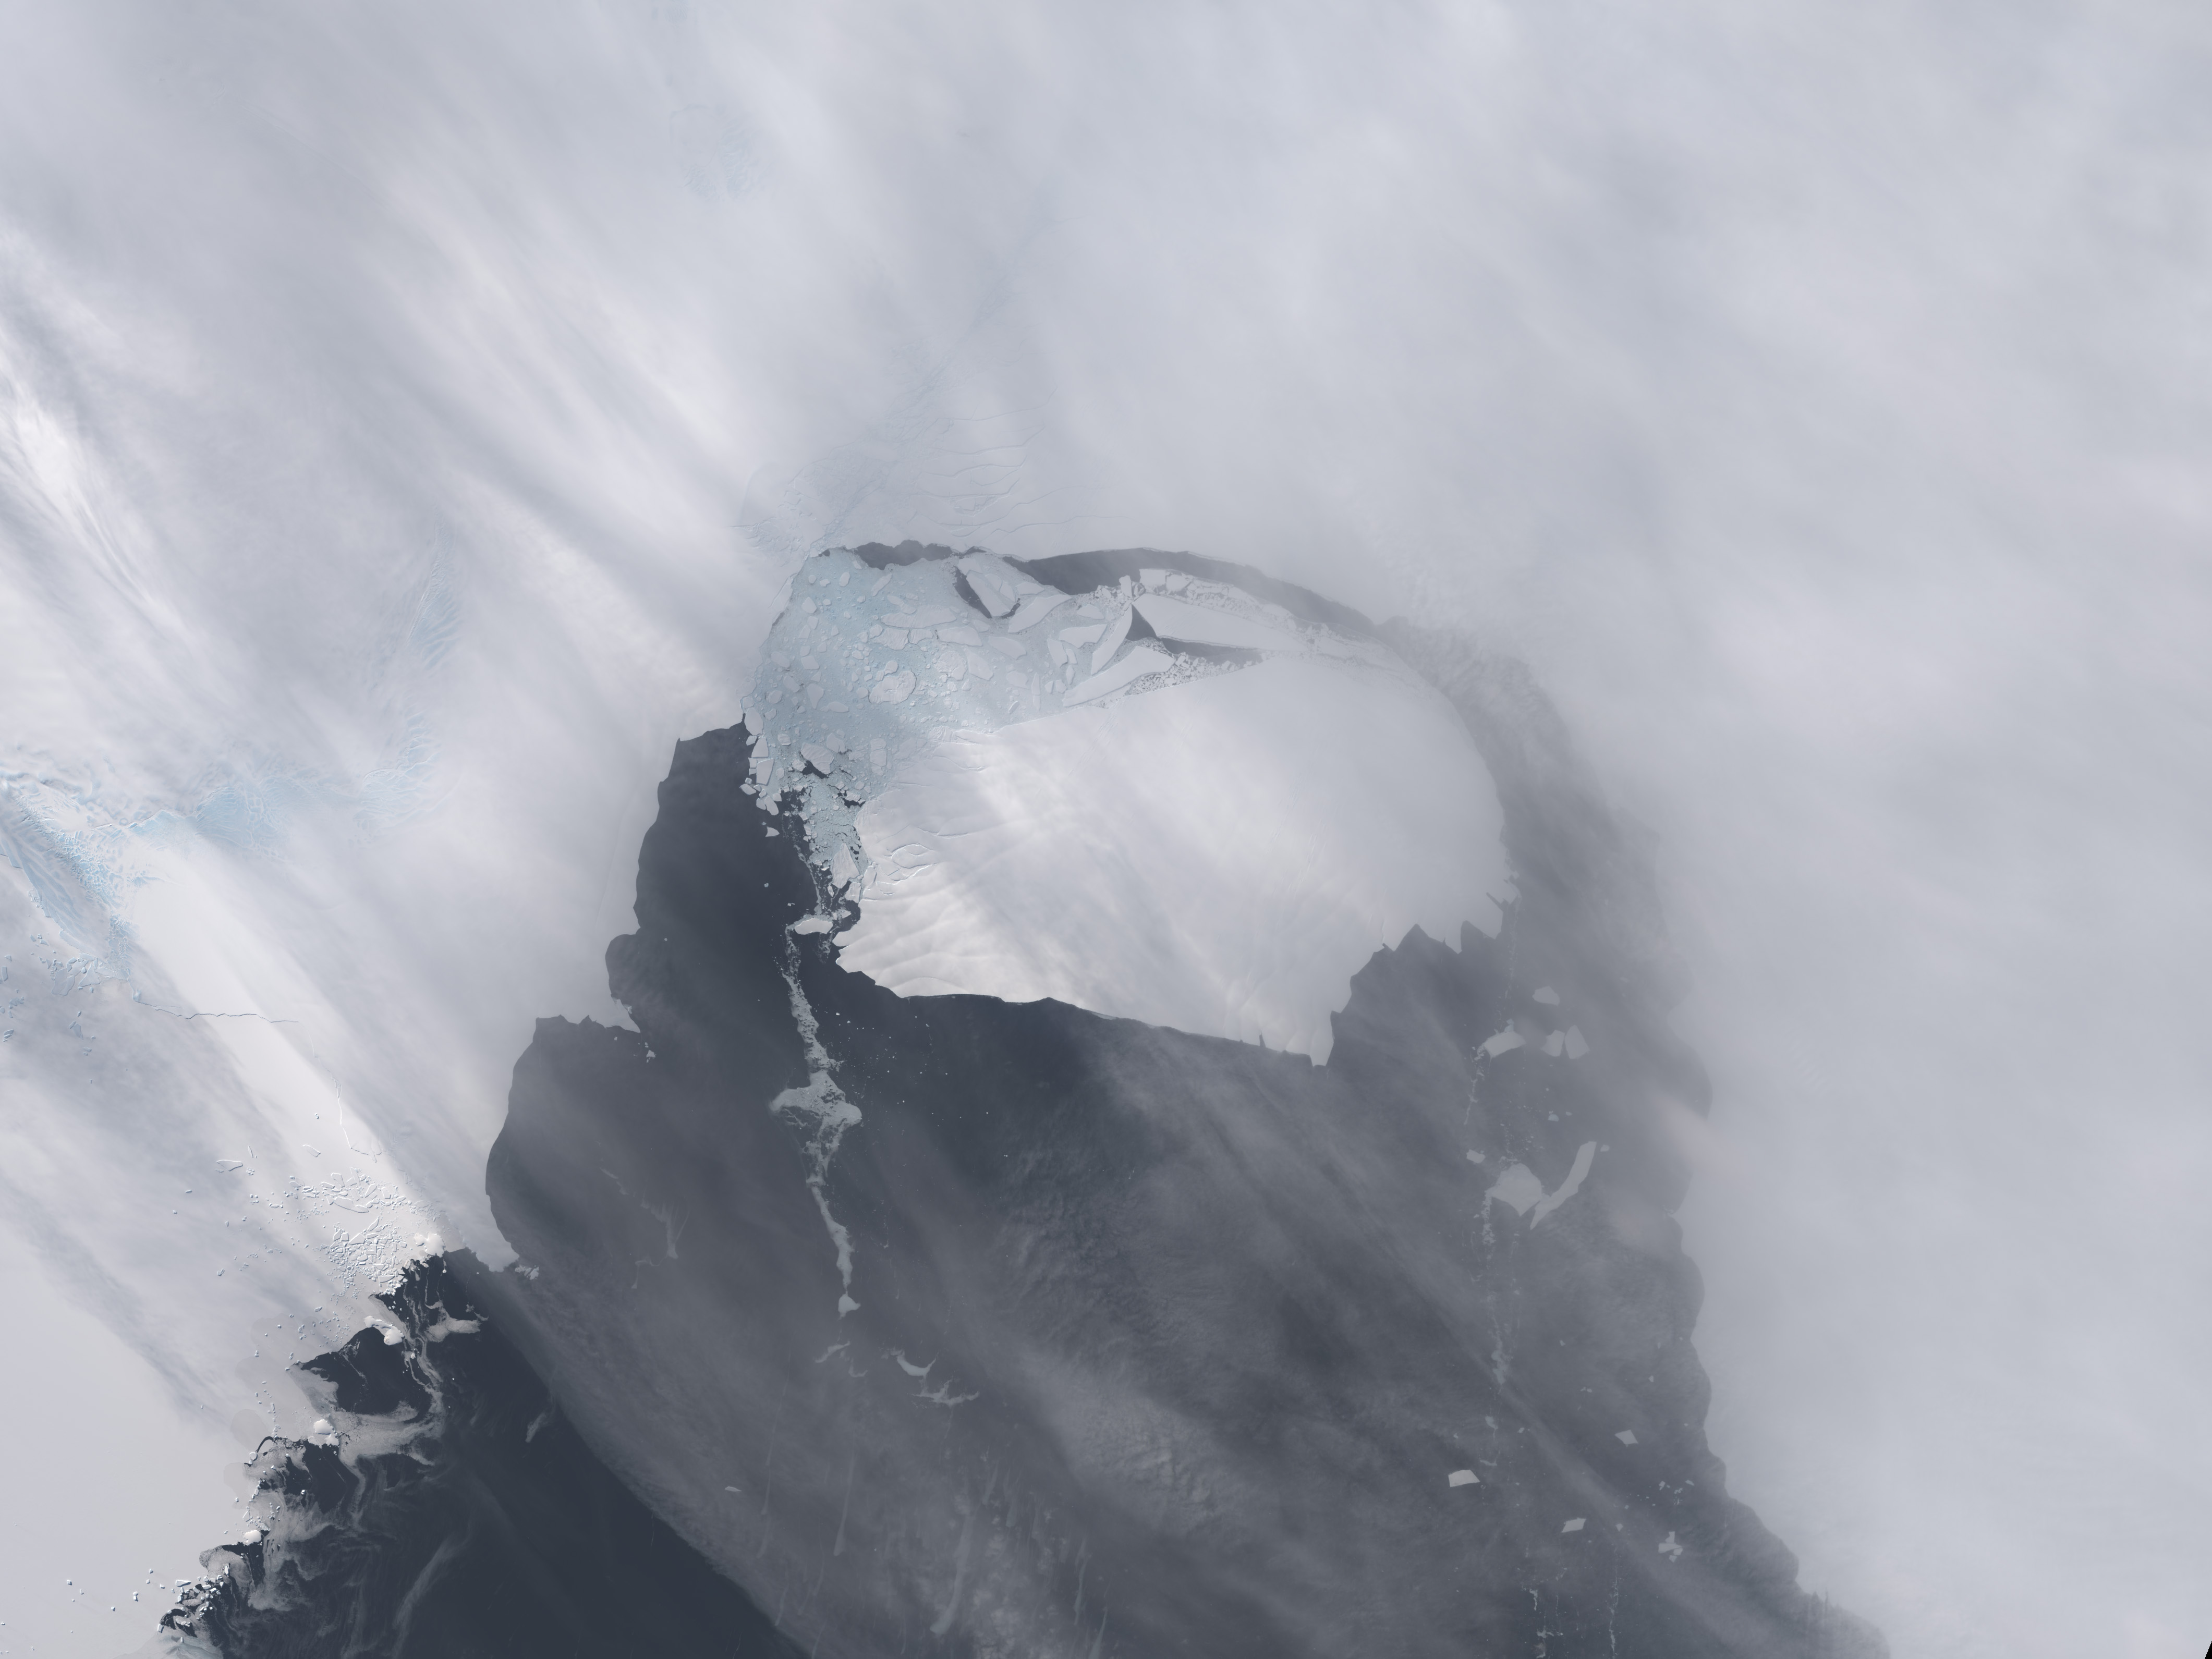 Major Iceberg Cracks off Pine Island Glacier - related image preview